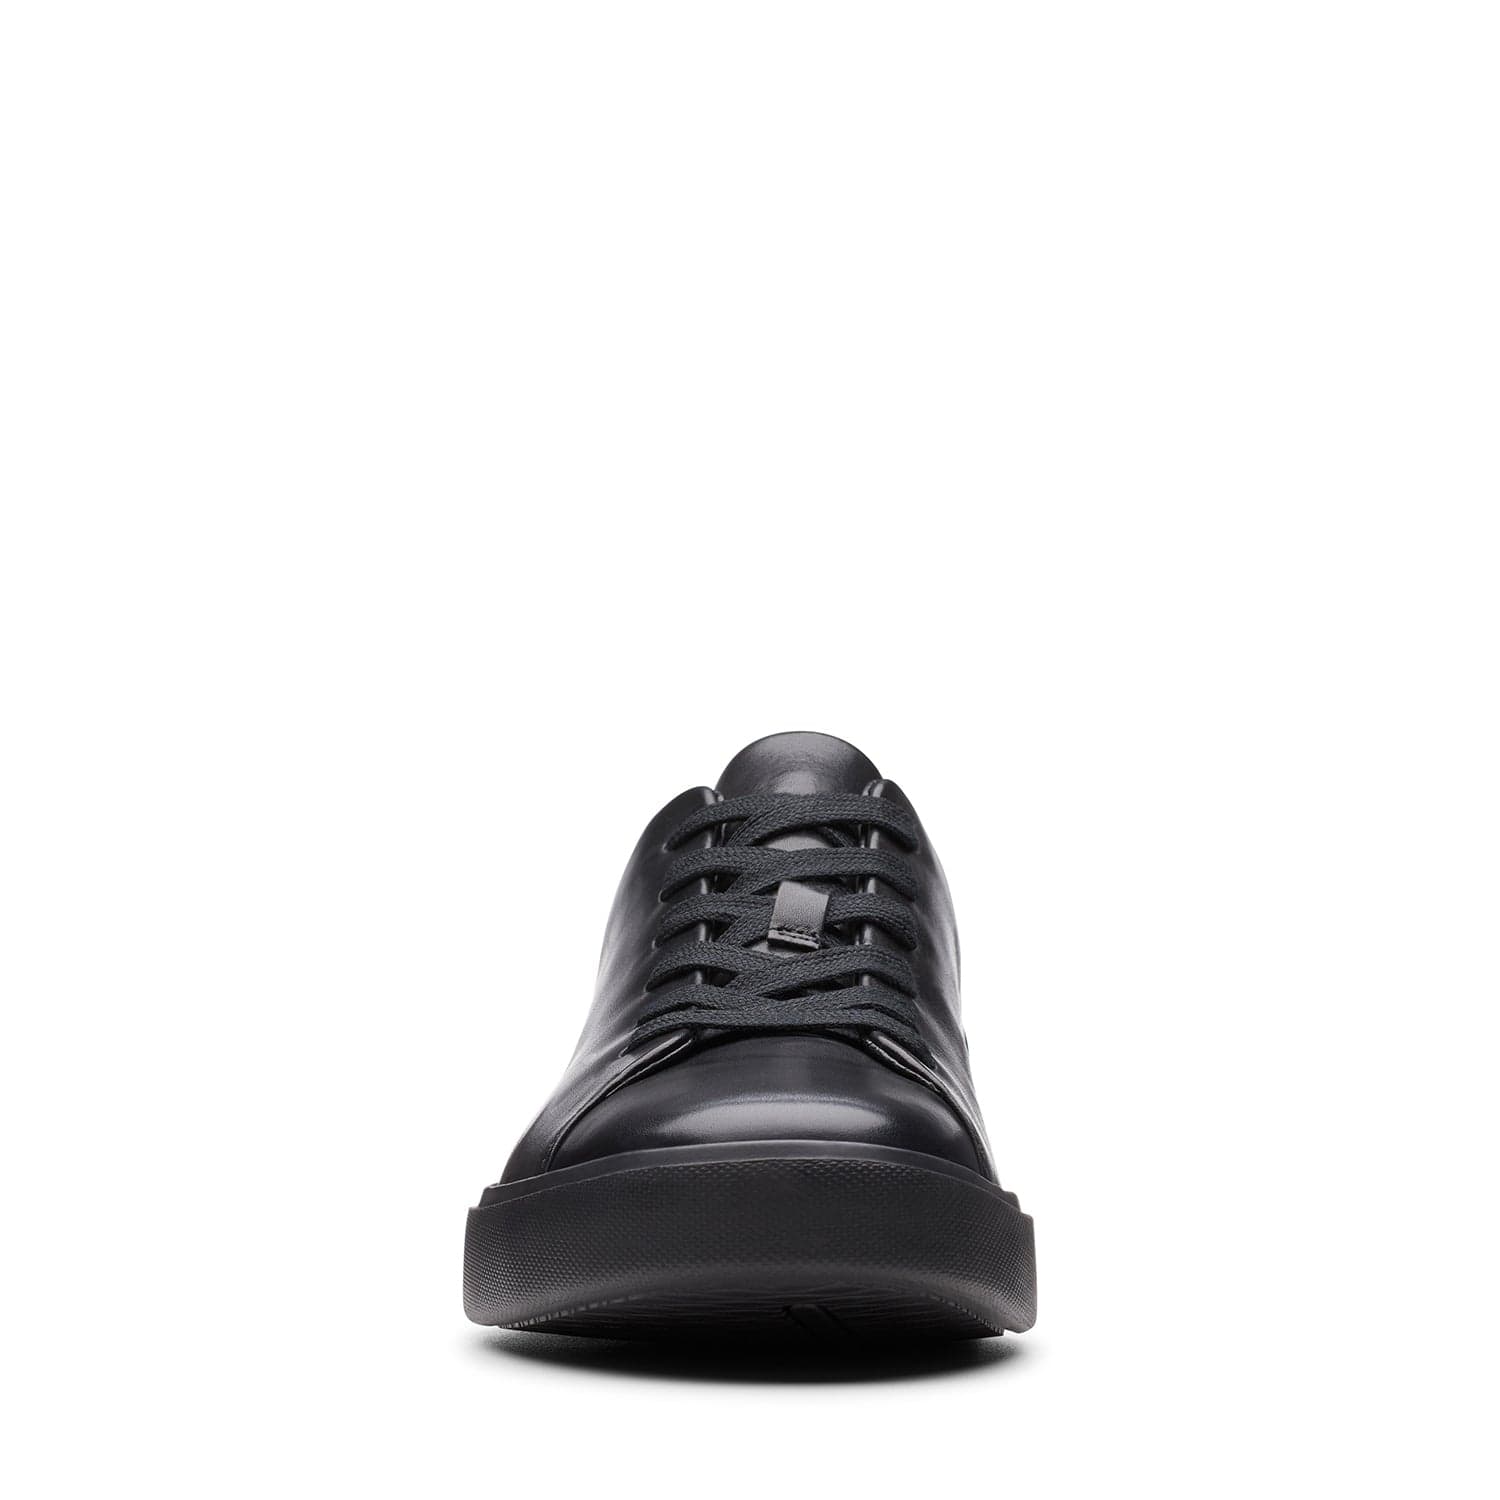 كلاركس اون كوستا دانتيل - حذاء - اسود - 261449047 - عرض G (مقاس قياسي)